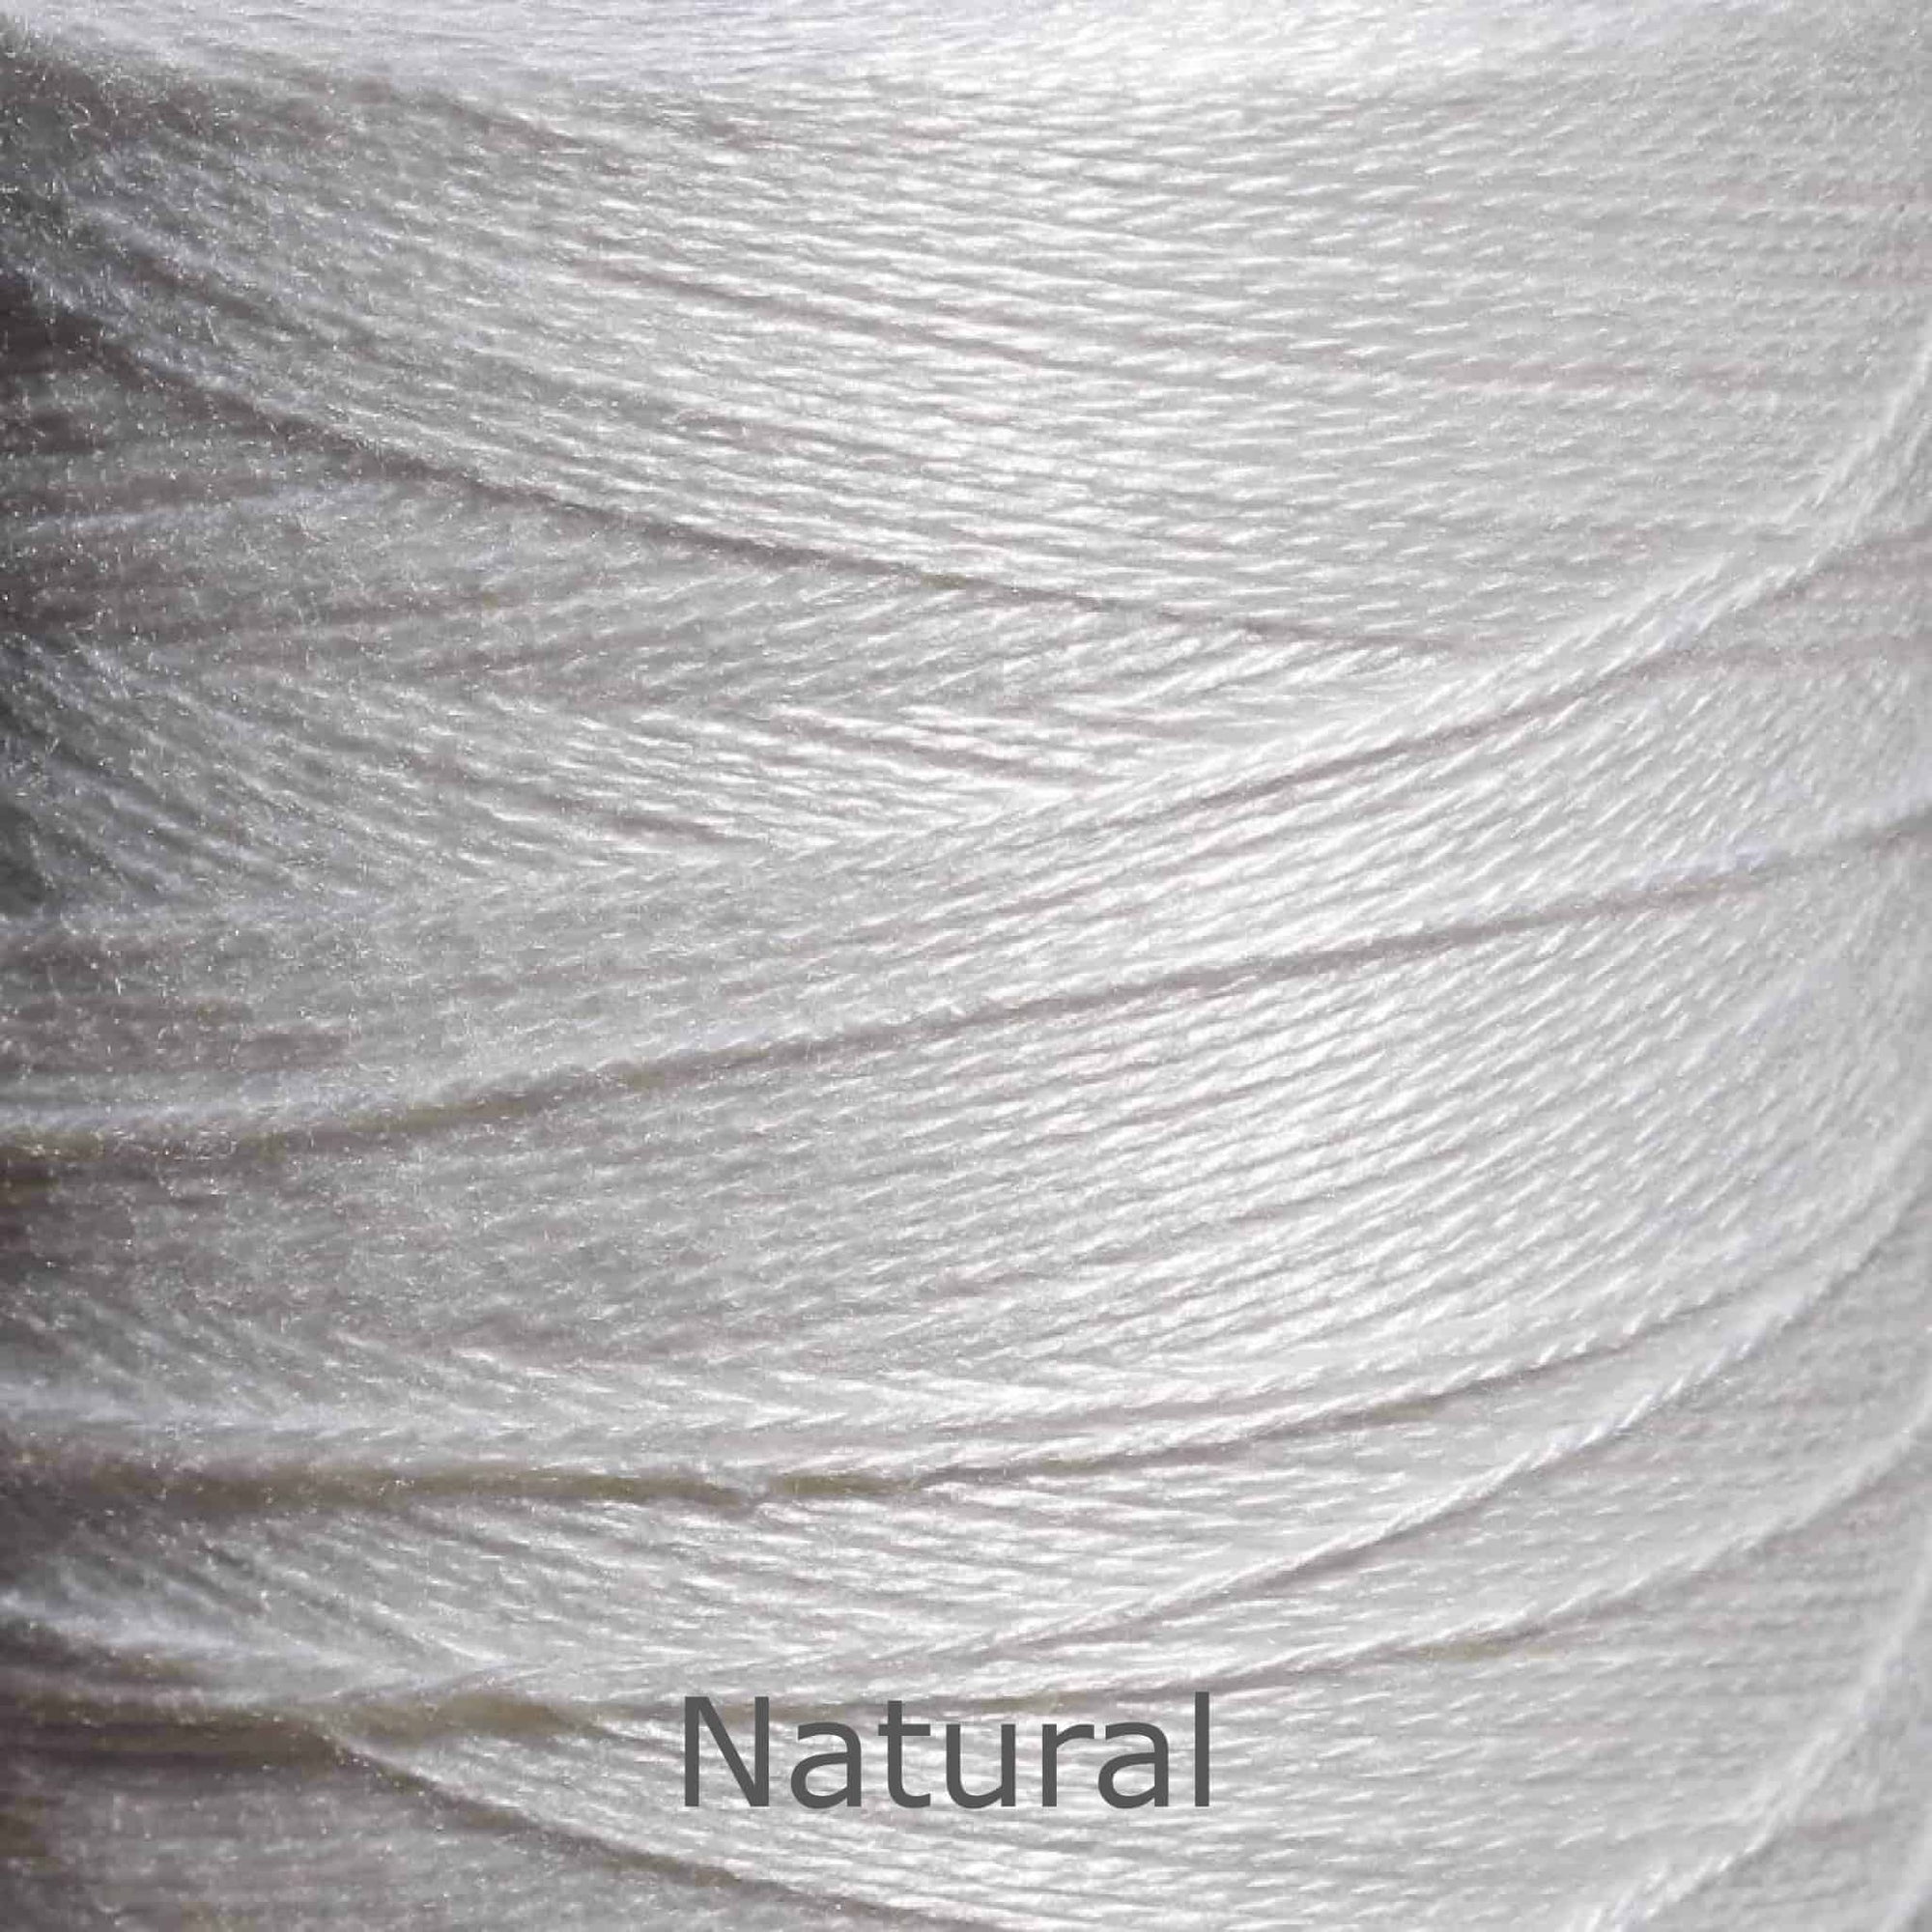 70% Bamboo / 30% Cotton Ne 8/2 Maurice Brassard - Thread Collective Australia